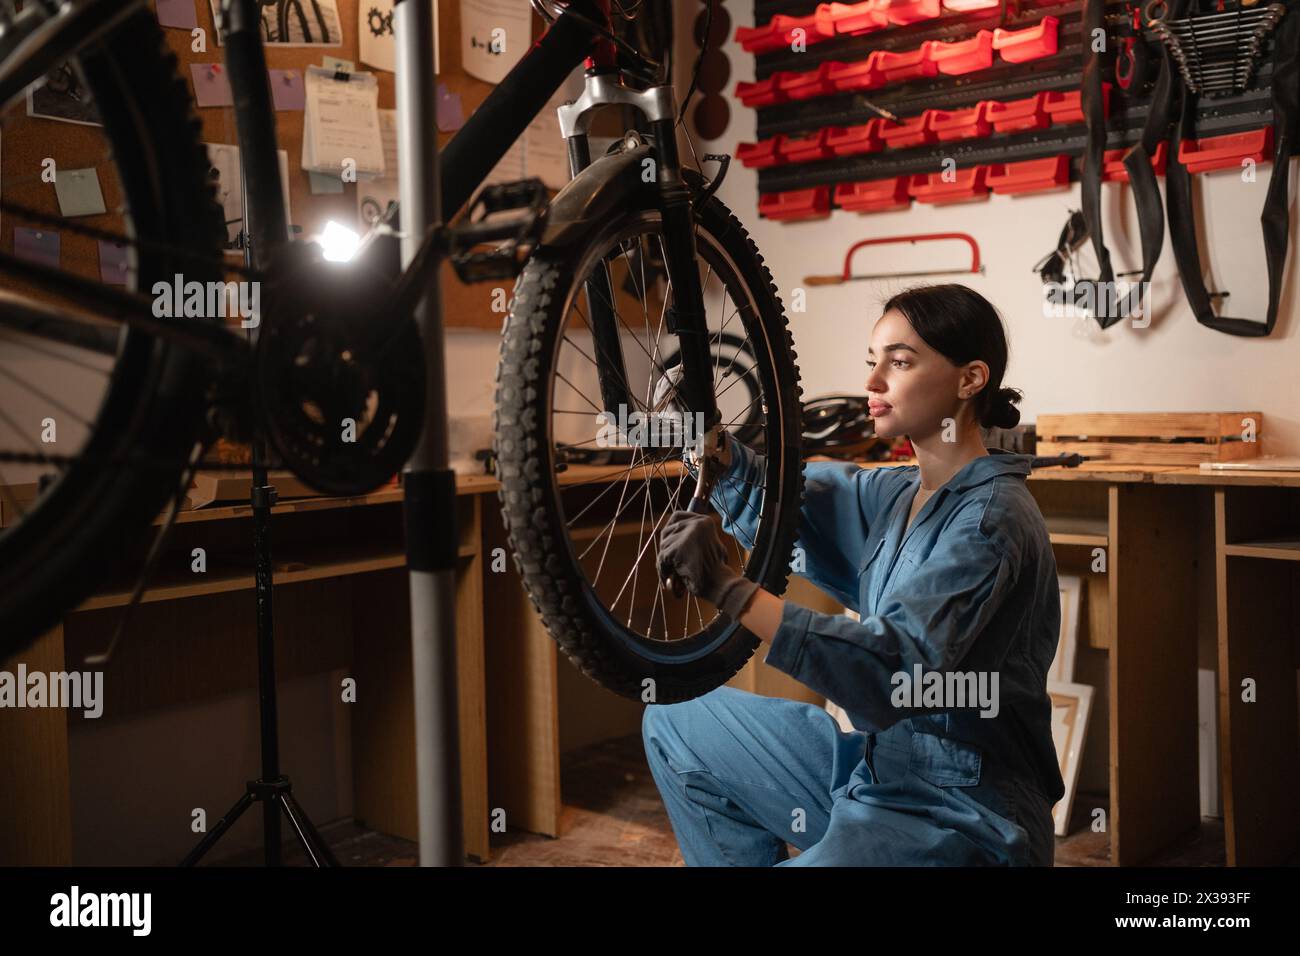 Bicycle female mechanic squatting repairing bike doing his professional work in workshop or garage. Stock Photo